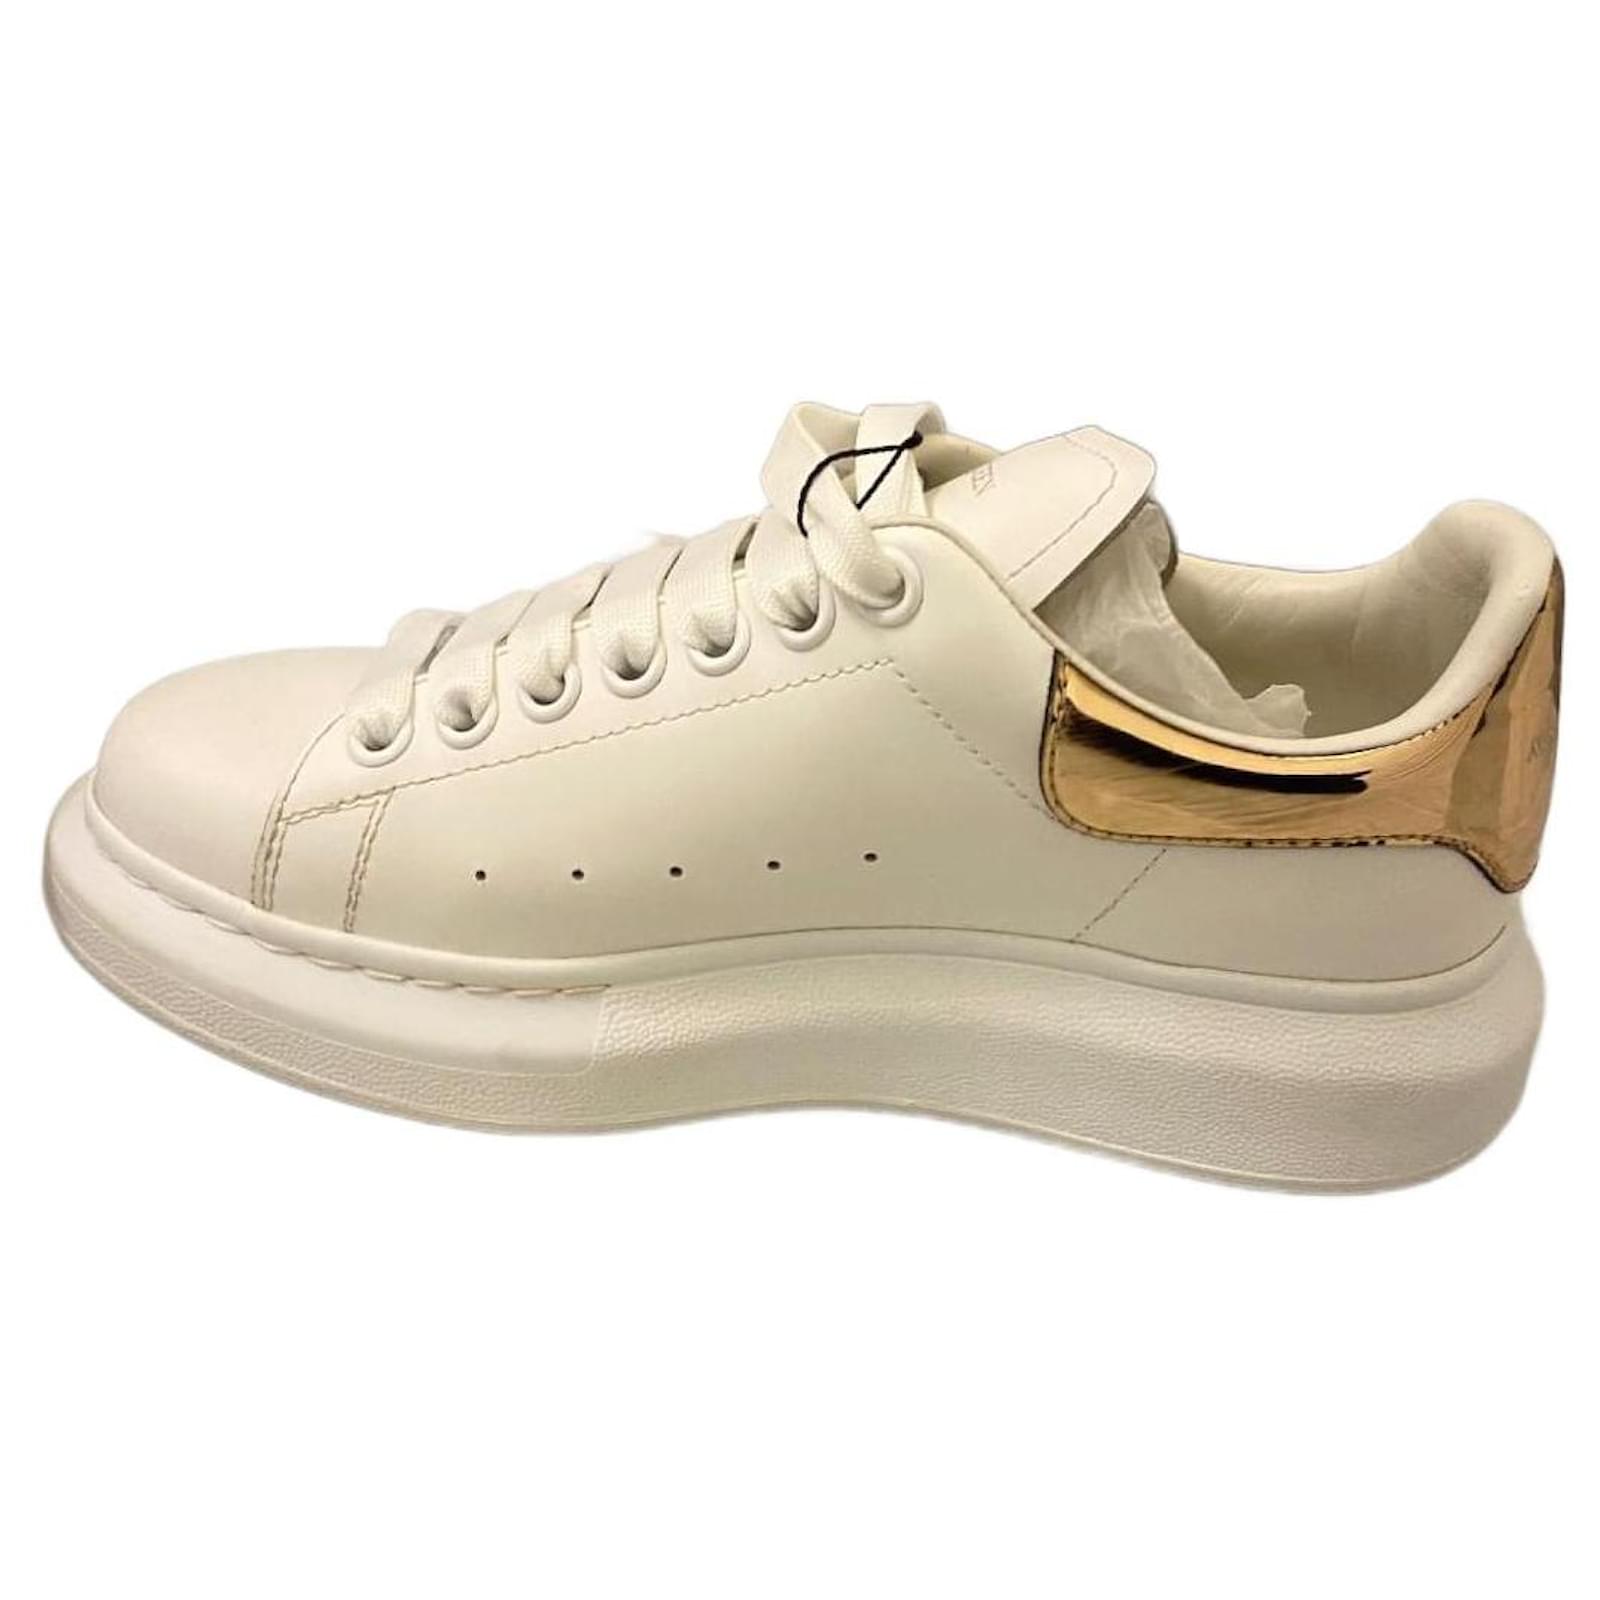 Alexander McQueen Oversized White/Gold Clear-Sole Sneakers Size 10 US /40  EU | eBay